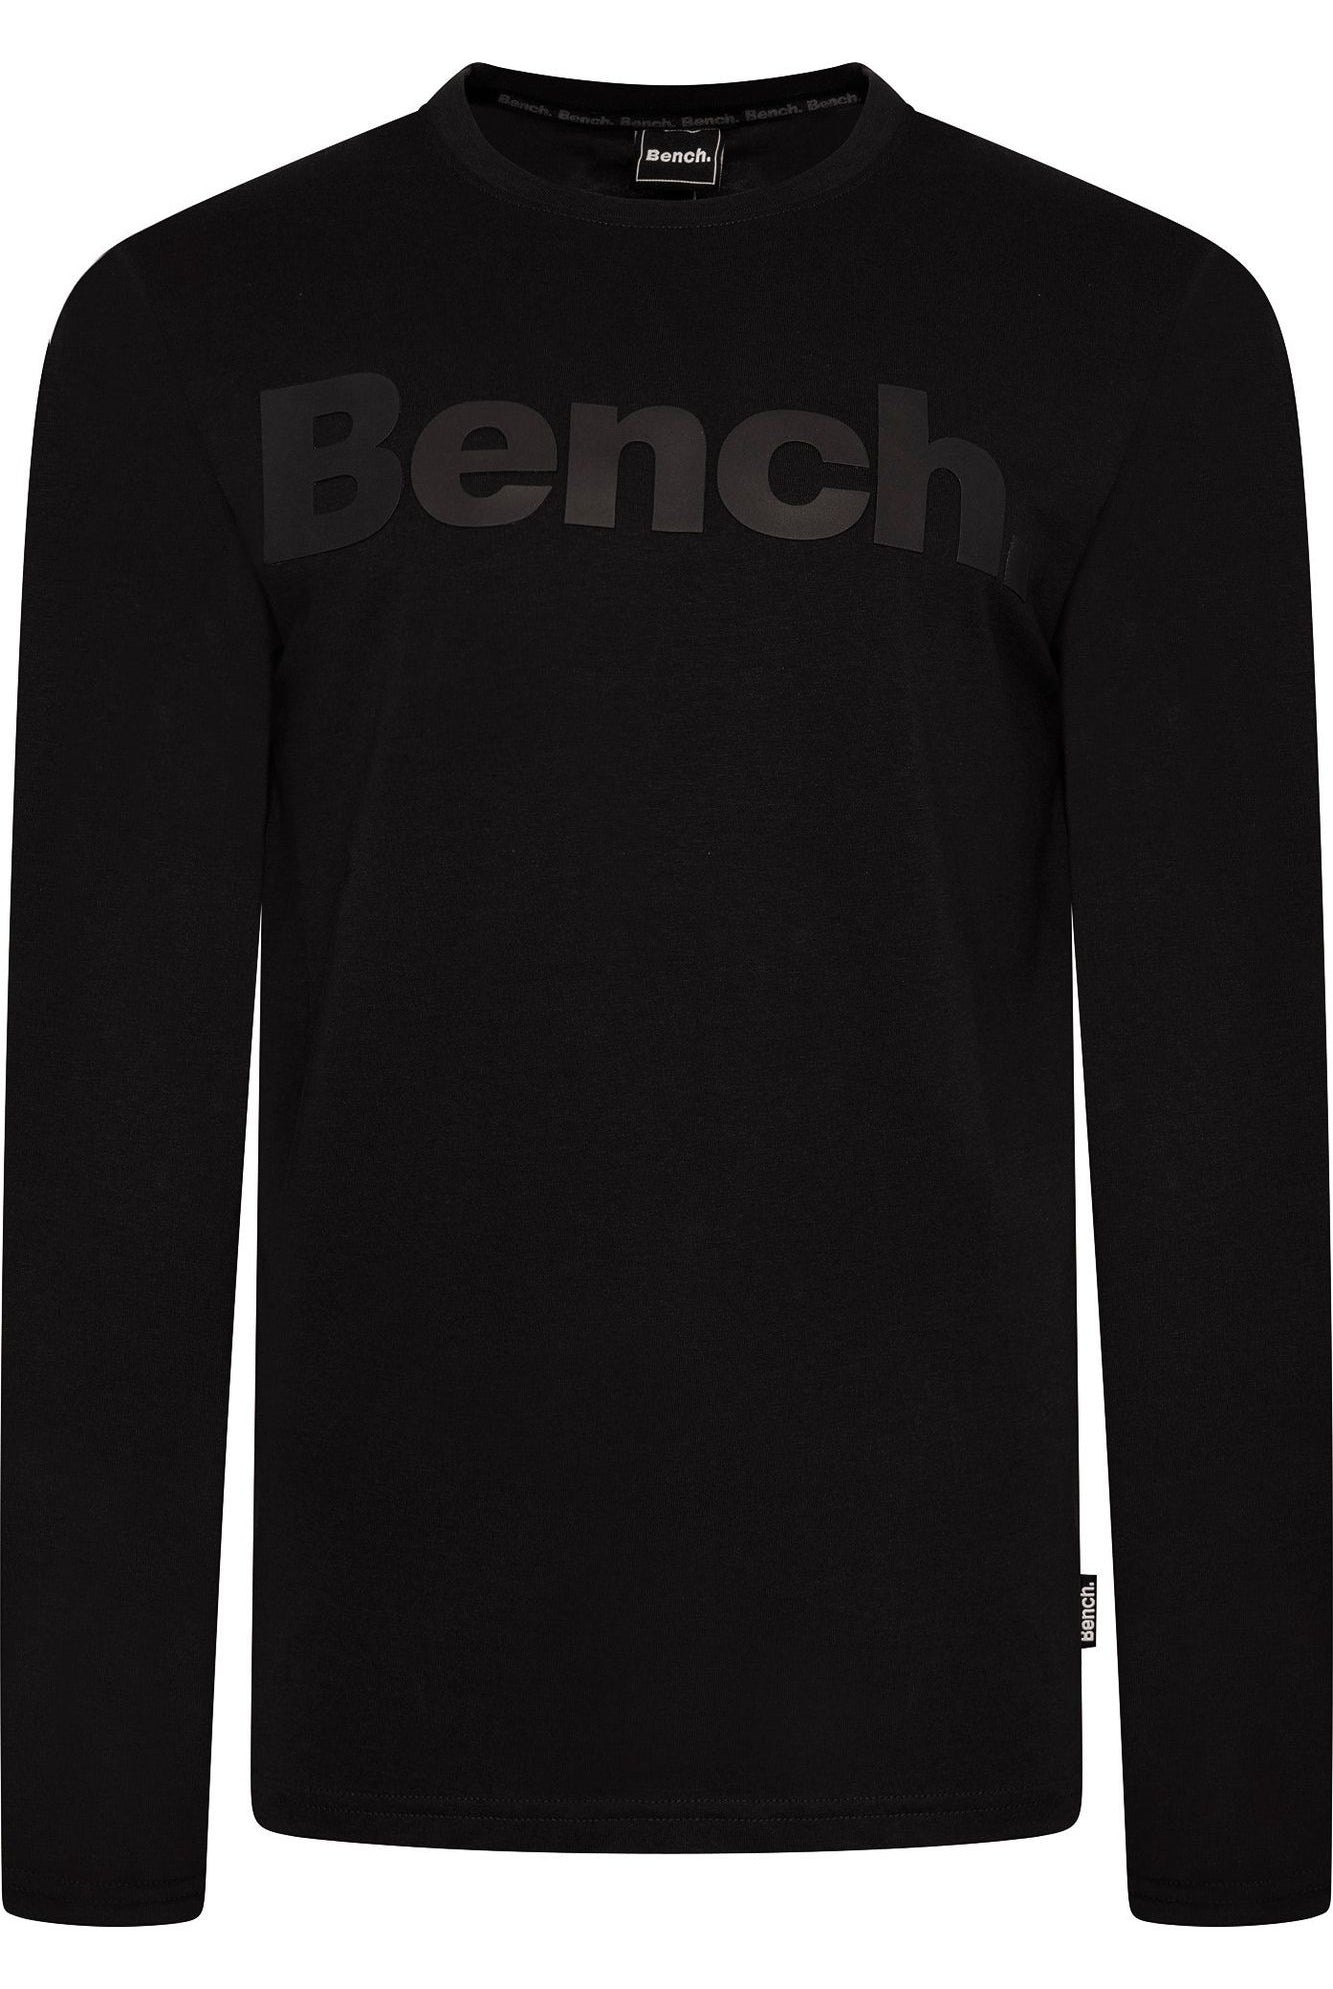 Mens 'FARGAN' Long Sleeve 3 Pack T-Shirts - ASSORTED - Shop at www.Bench.co.uk #LoveMyHood